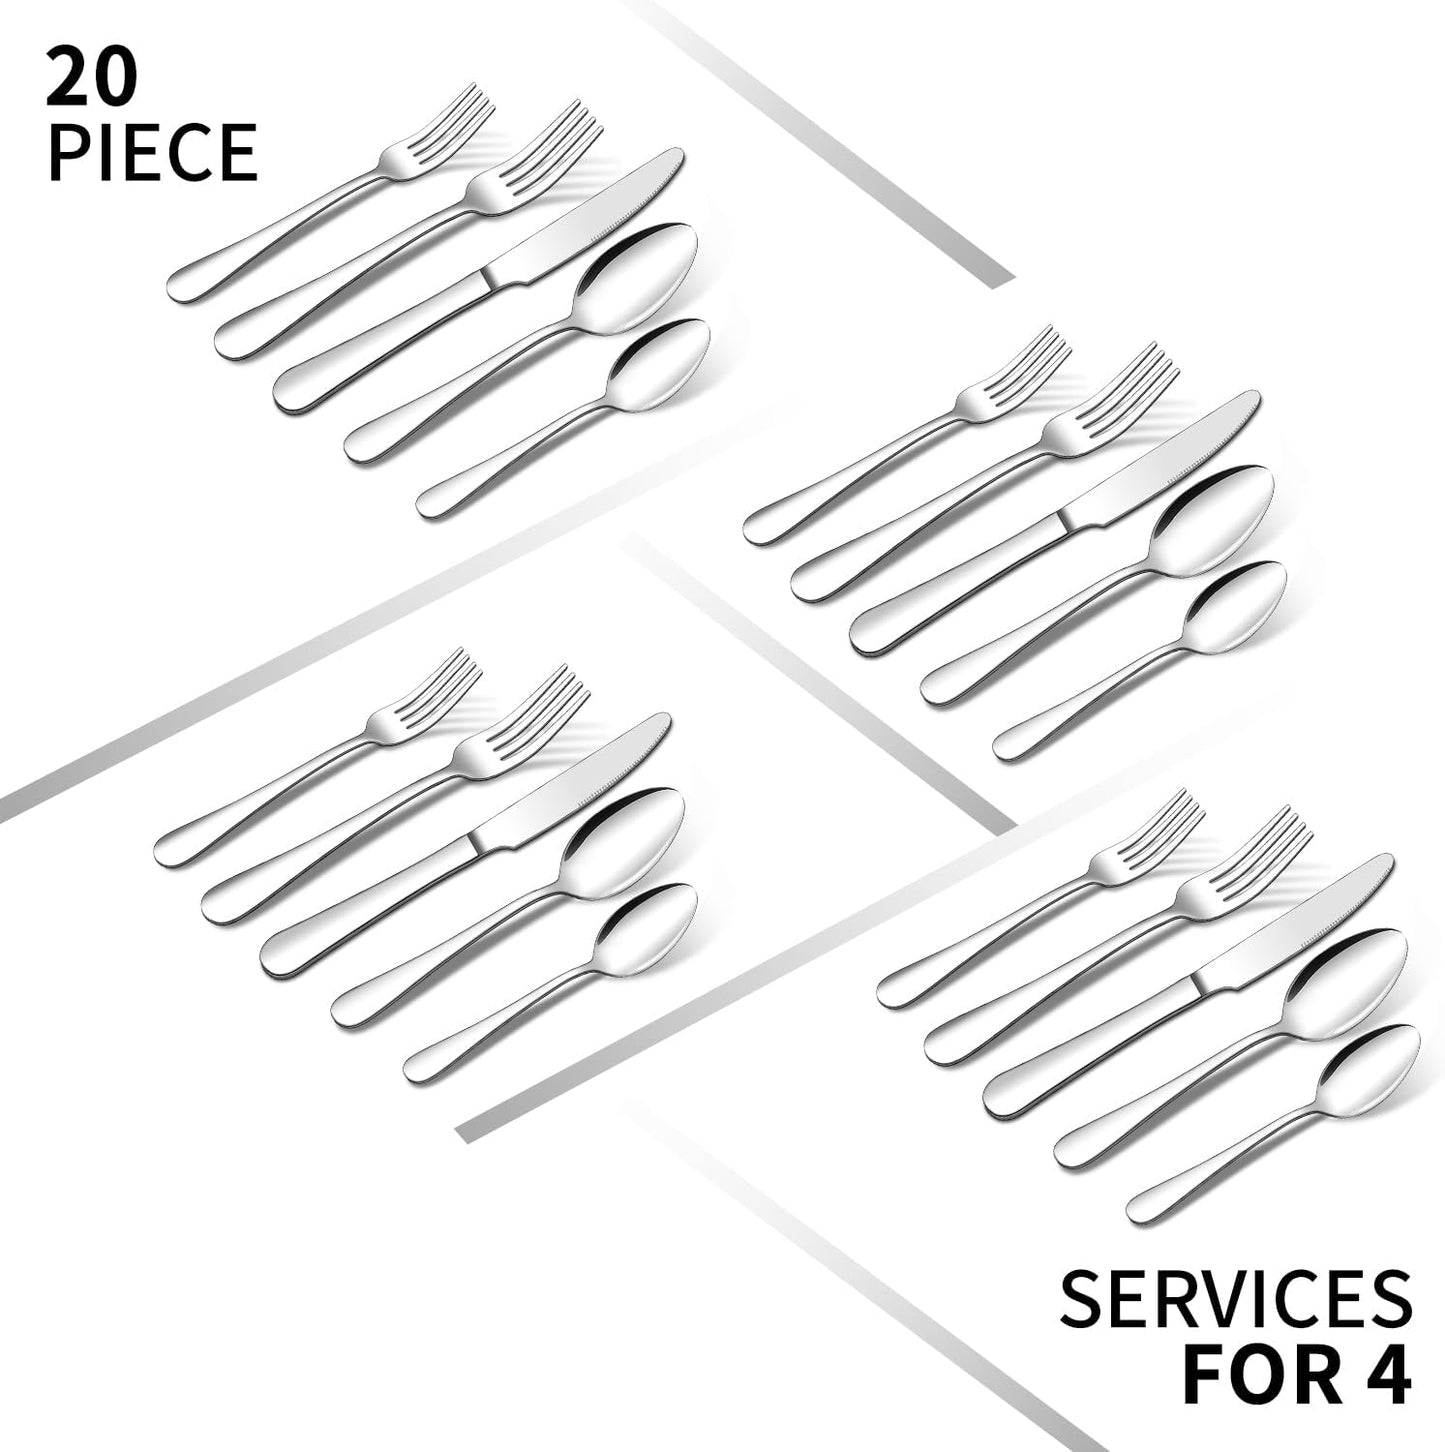 20 Piece Silverware Set,  Stainless Steel Flatware Cutlery Set, Kitchen Utensil Set Service for 4, Include Knife Fork Spoon, Mirror Polished, Dishwasher Safe